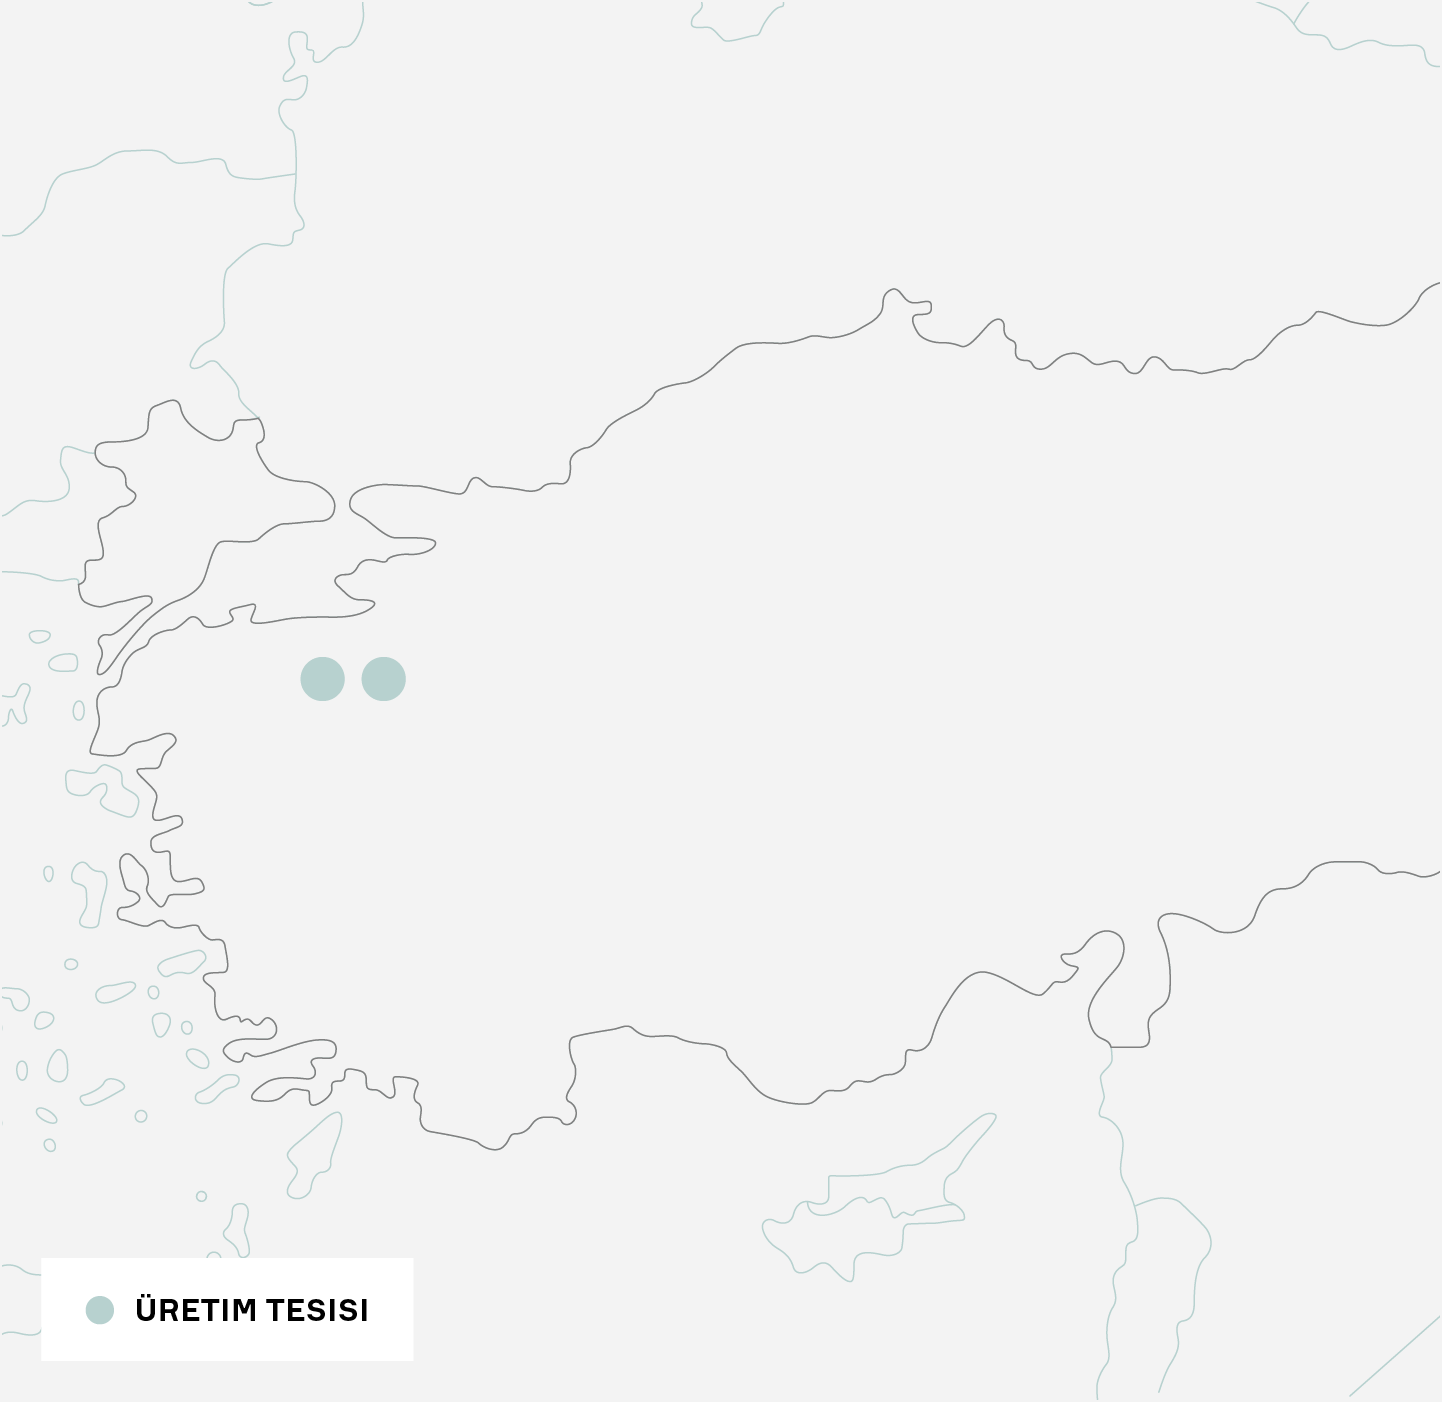 Map of Aptiv locations in Turkiye